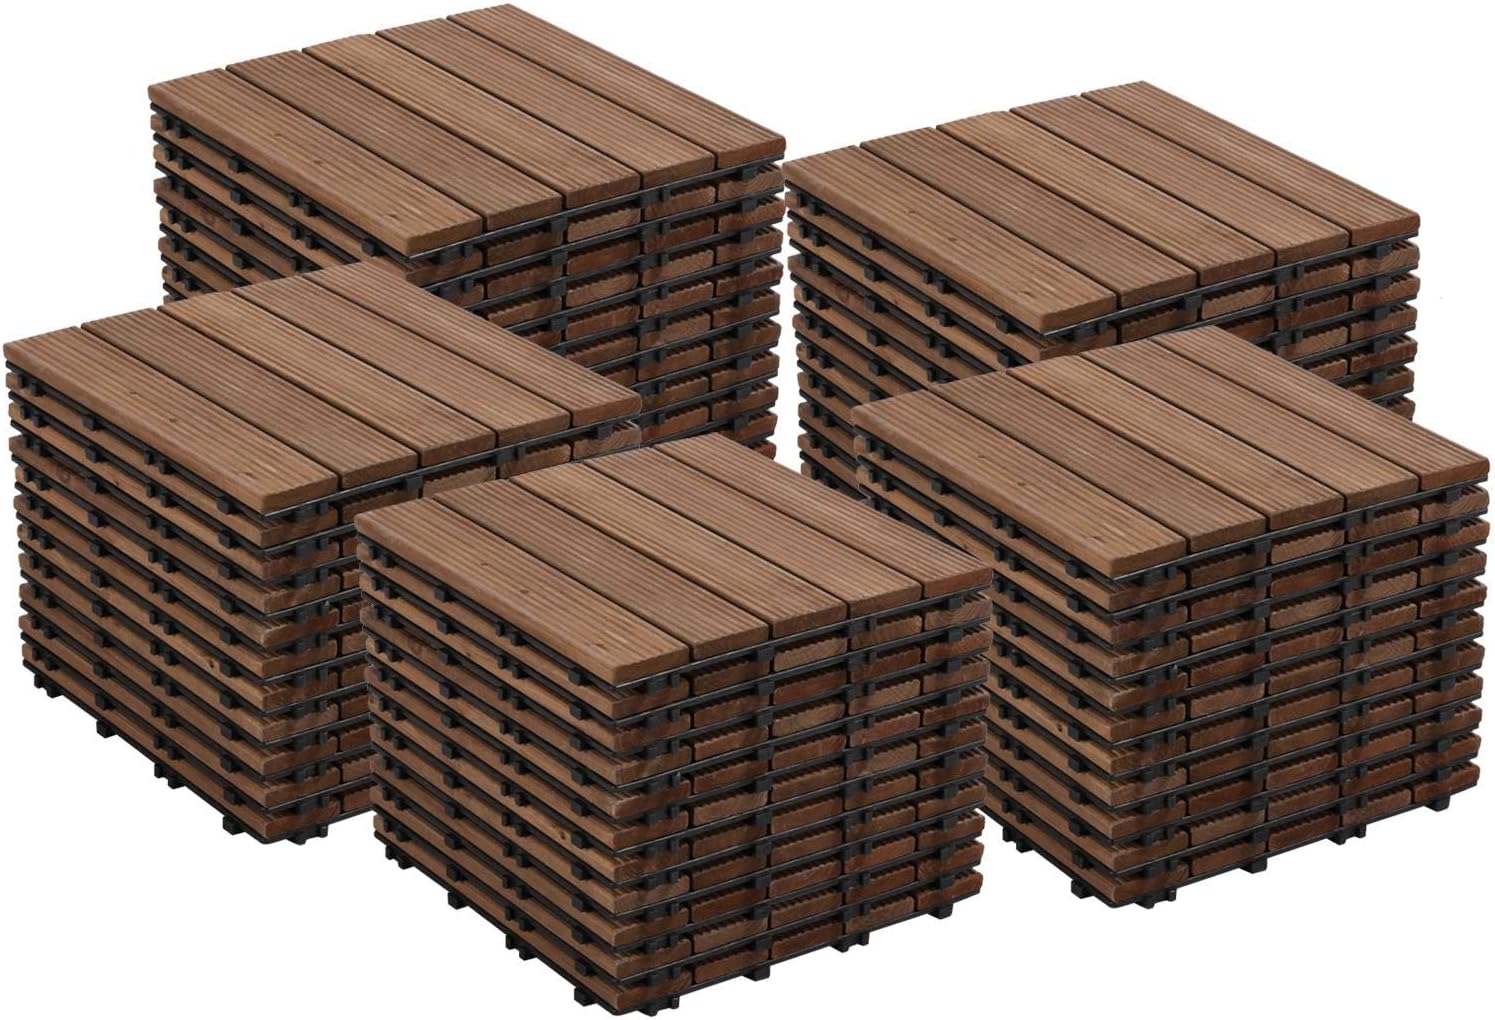 Yaheetech 55pcs Patio Deck Tiles Interlocking Wood [...]